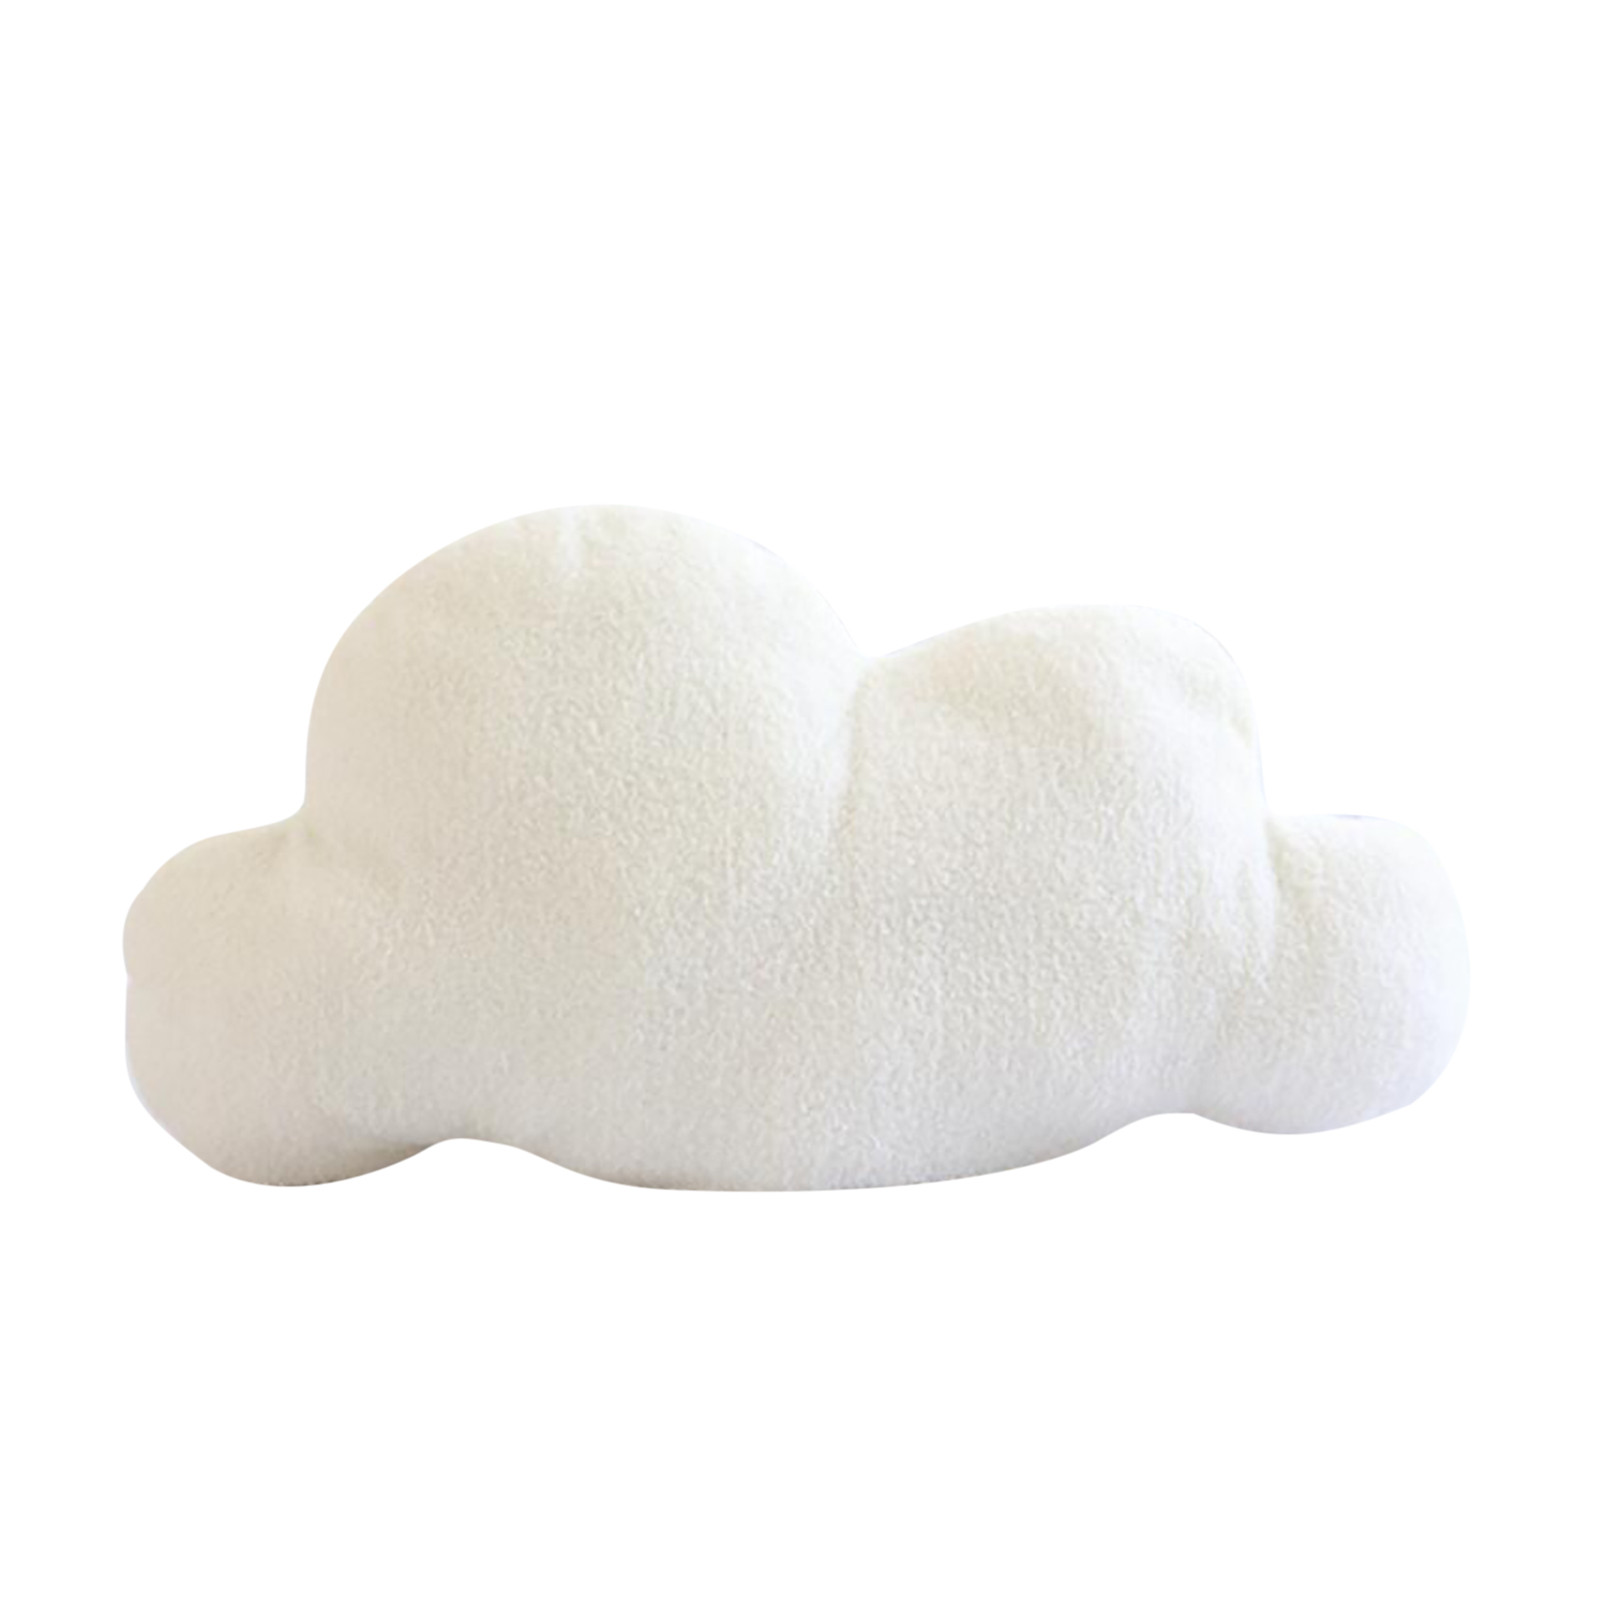 Fridja Soft Velvet Cloud Outdoor Pillow Soft Car Plush Nap Pillow Sofa Cushion Girls Kids Cloud Pillow Cartoon Clouds Shaped Throw Pillows - image 1 of 4